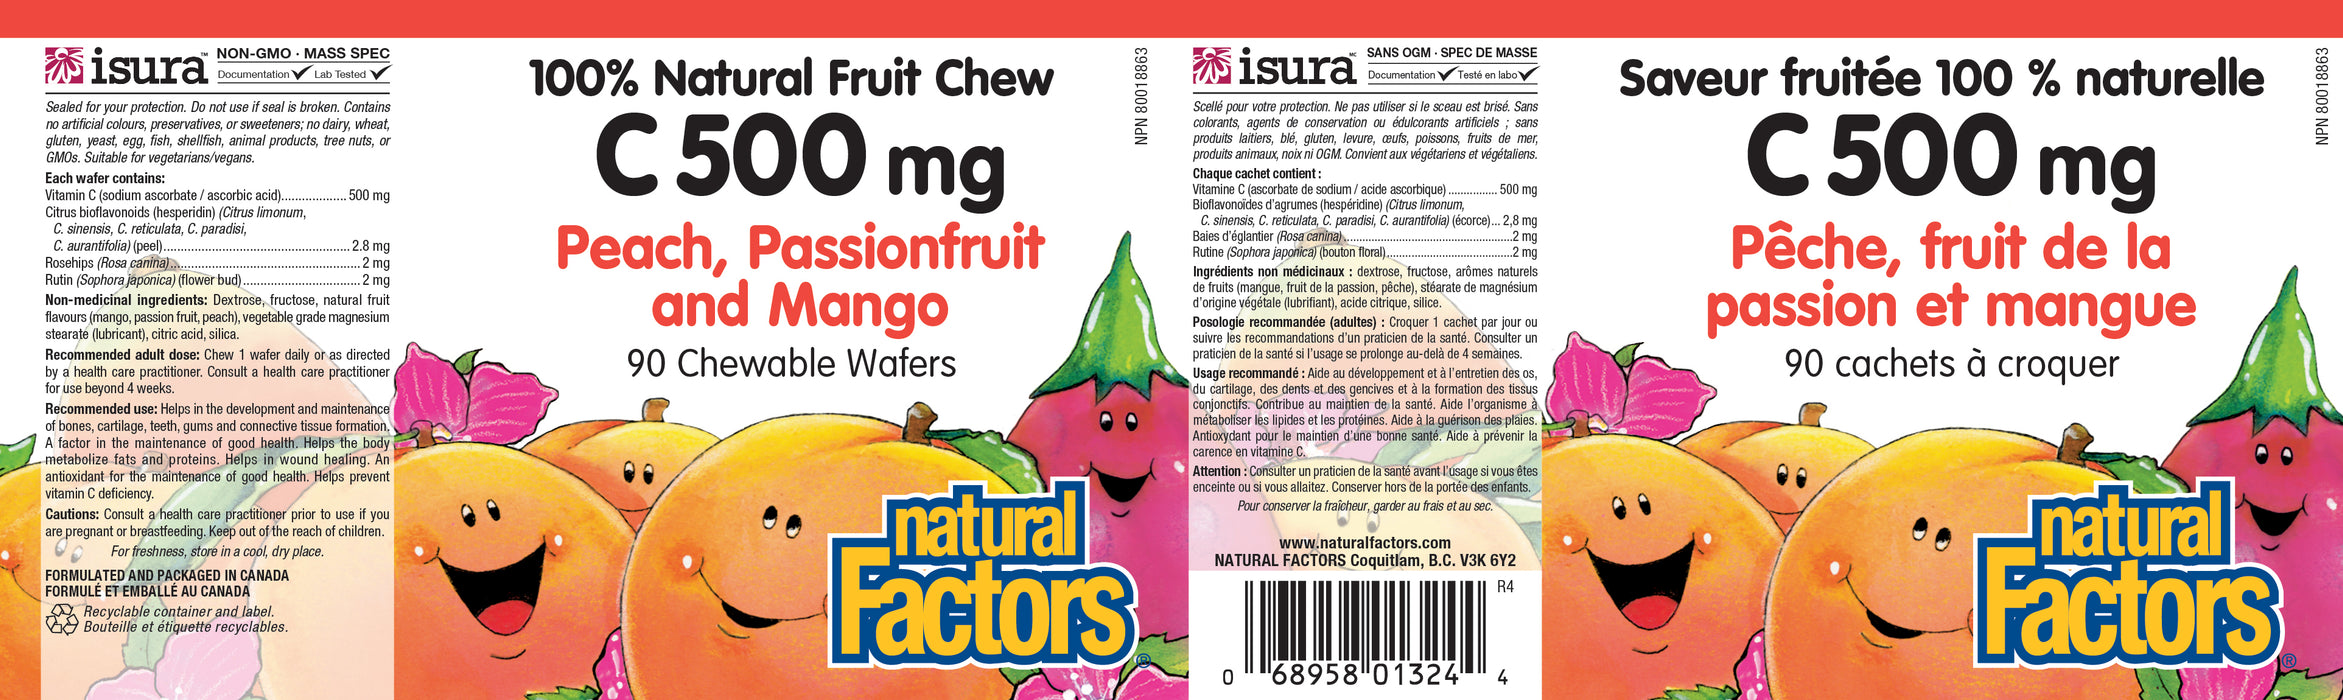 Natural Factors C 500mg 100% Peach, Passionfruit, and Mango